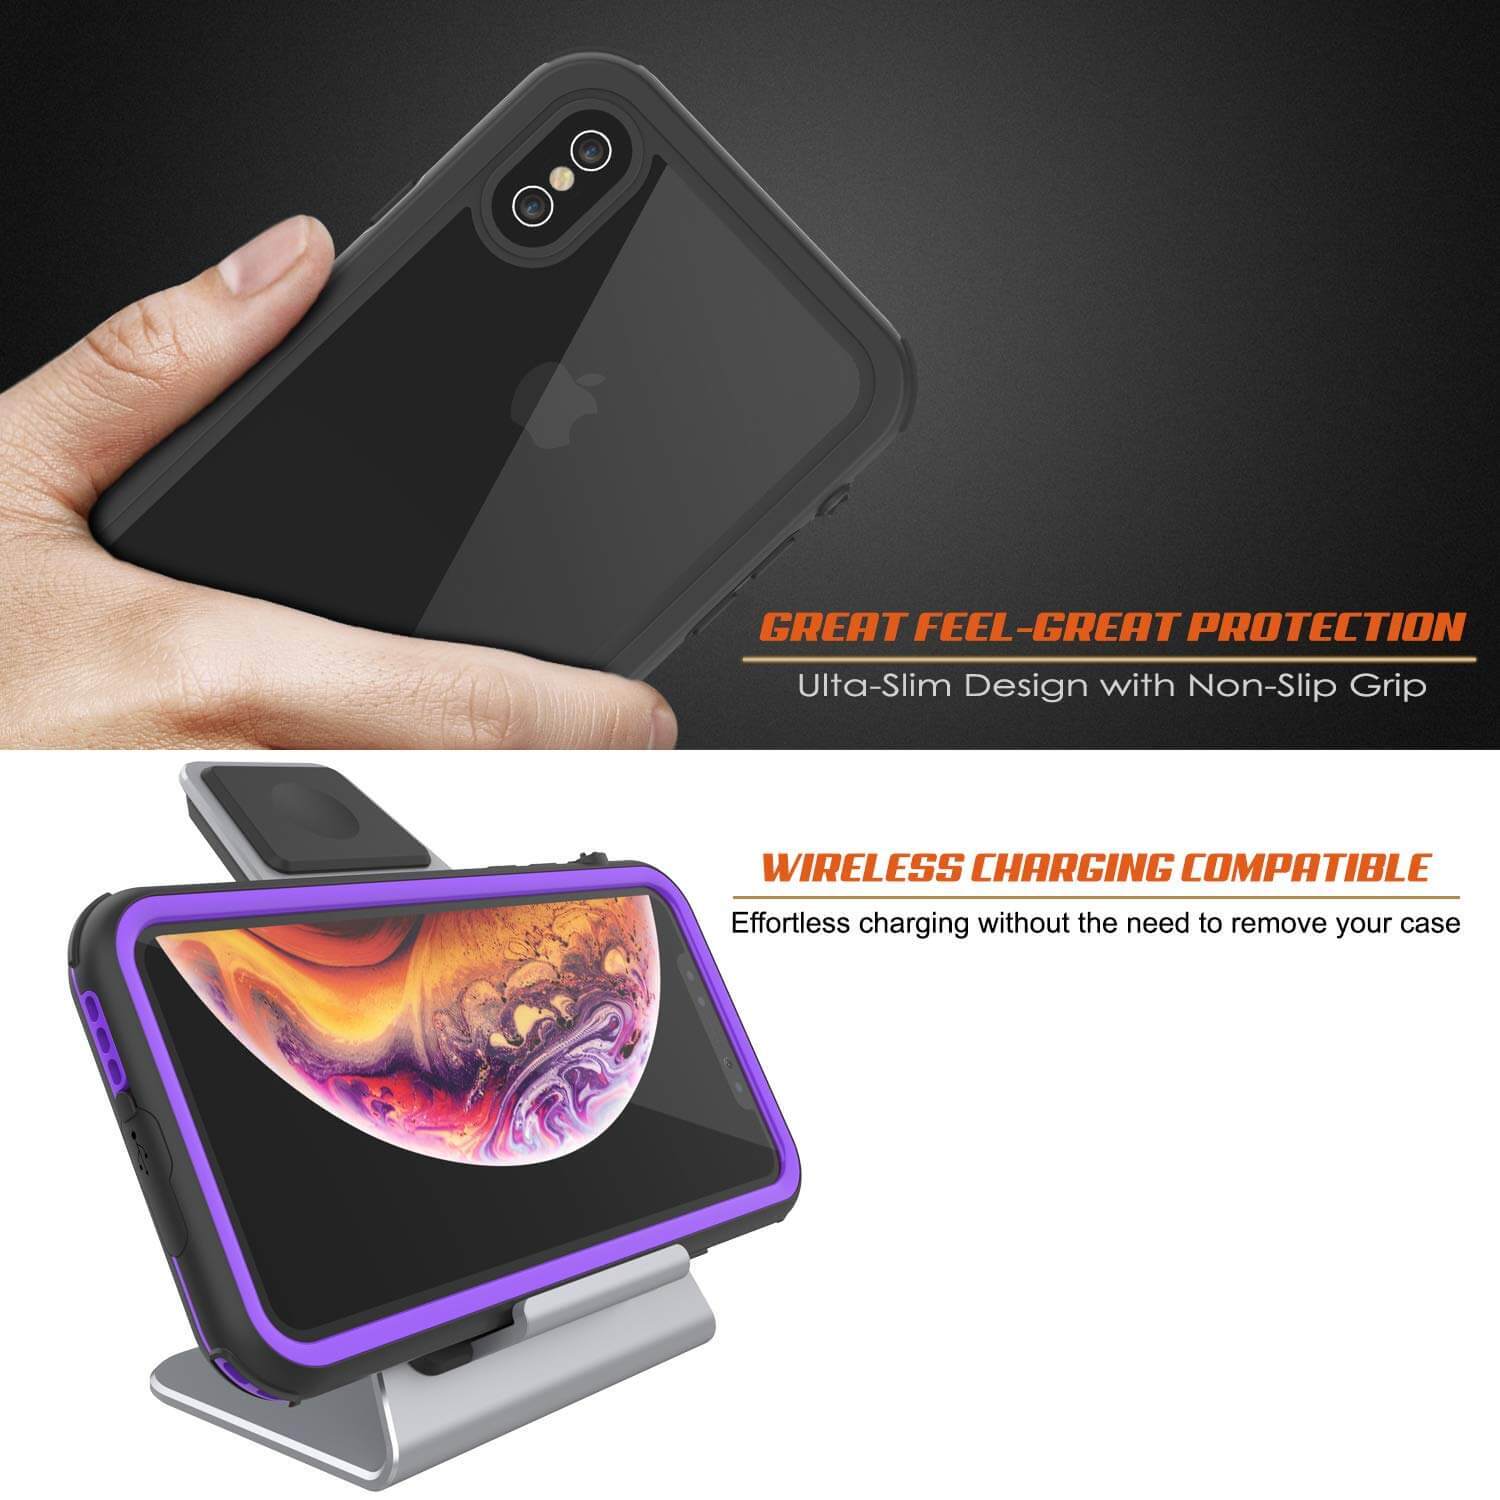 iPhone XS Waterproof IP68 Case, Punkcase [Purple] [Rapture Series]  W/Built in Screen Protector